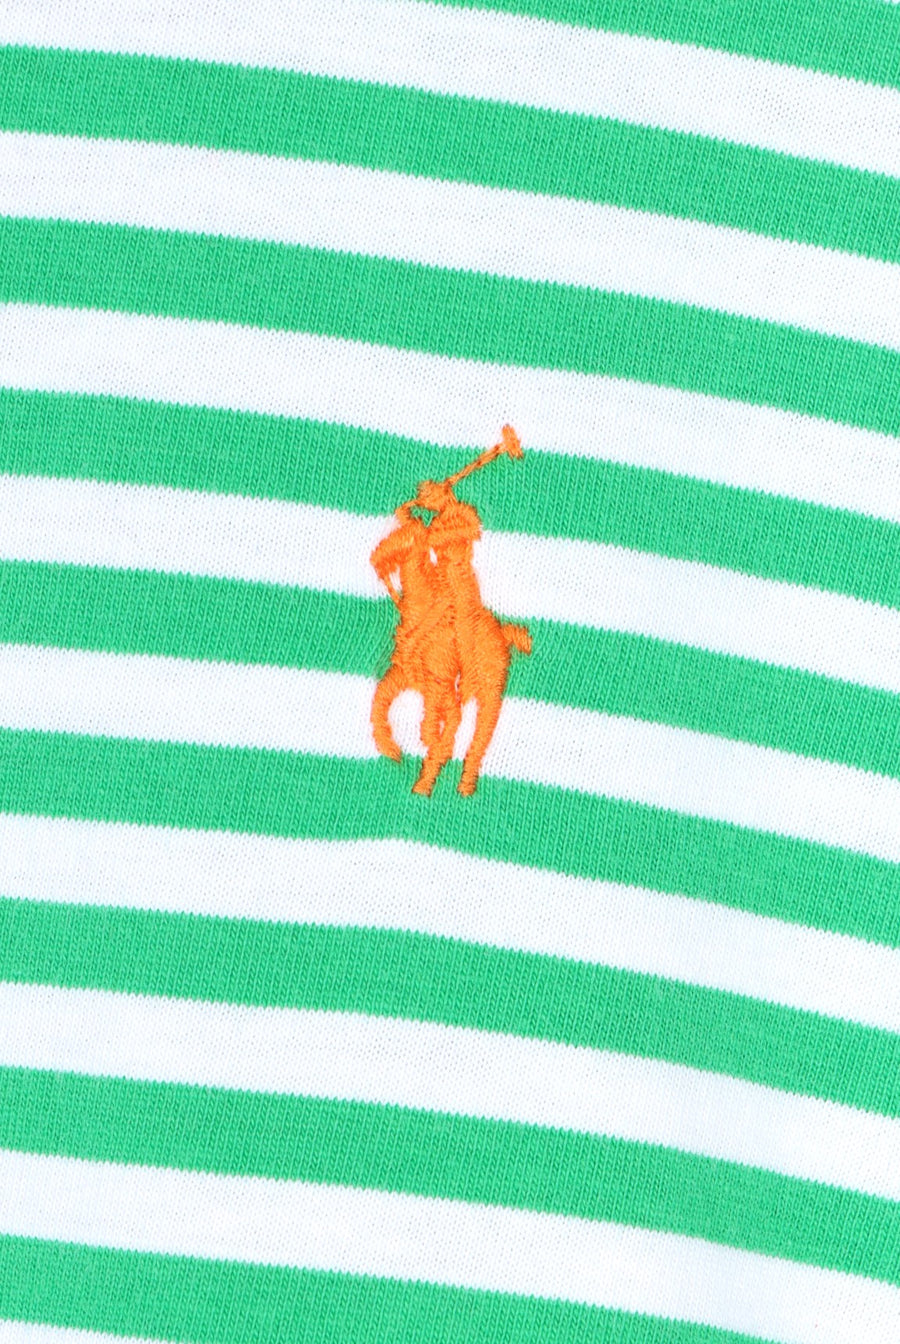 RALPH LAUREN POLO Green Striped Single Stitch T-Shirt (L)